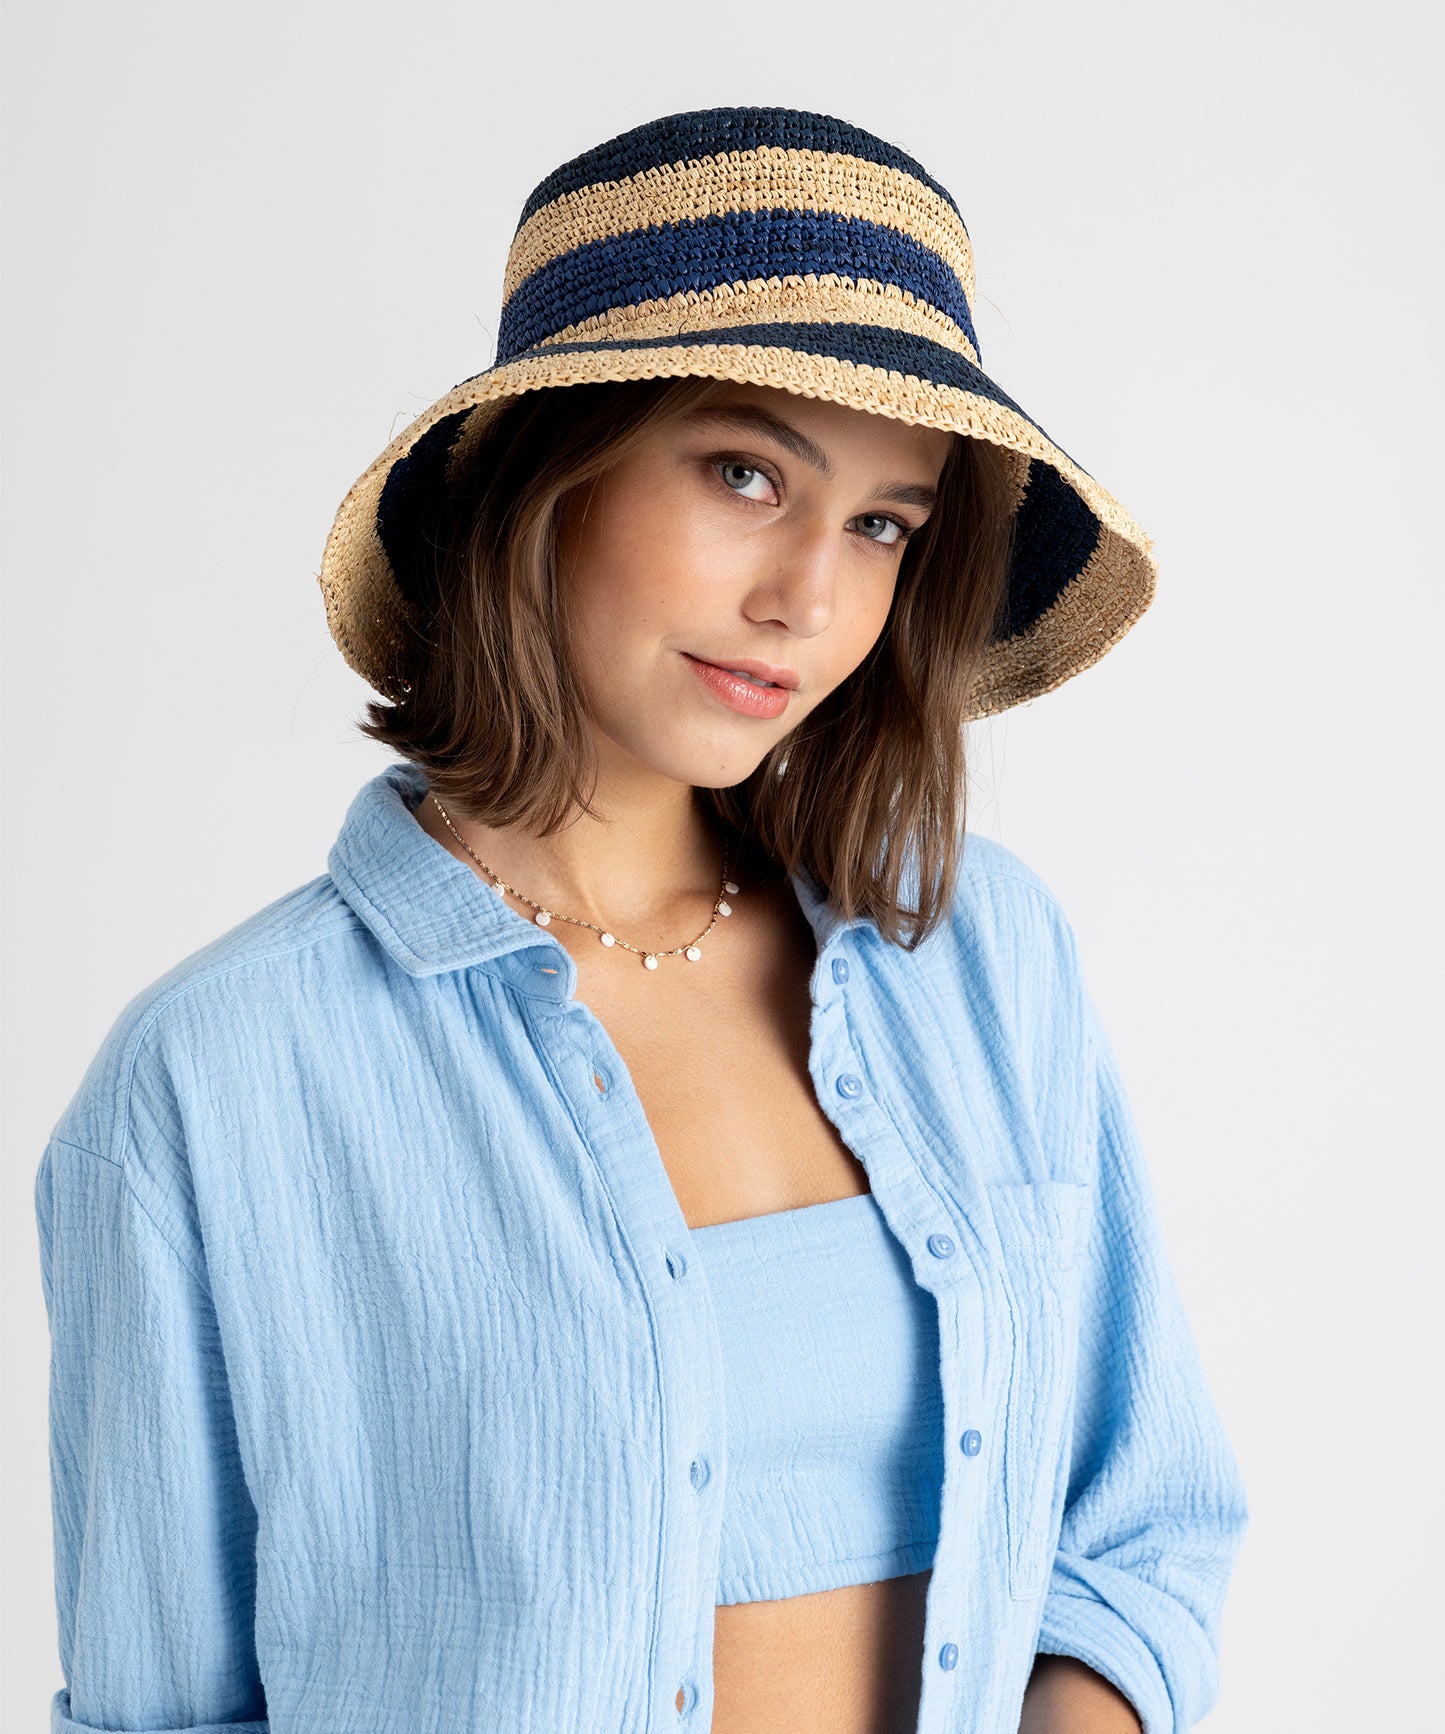 Echo Raffia Packable Bucket Hat In Natural – Sandpipers